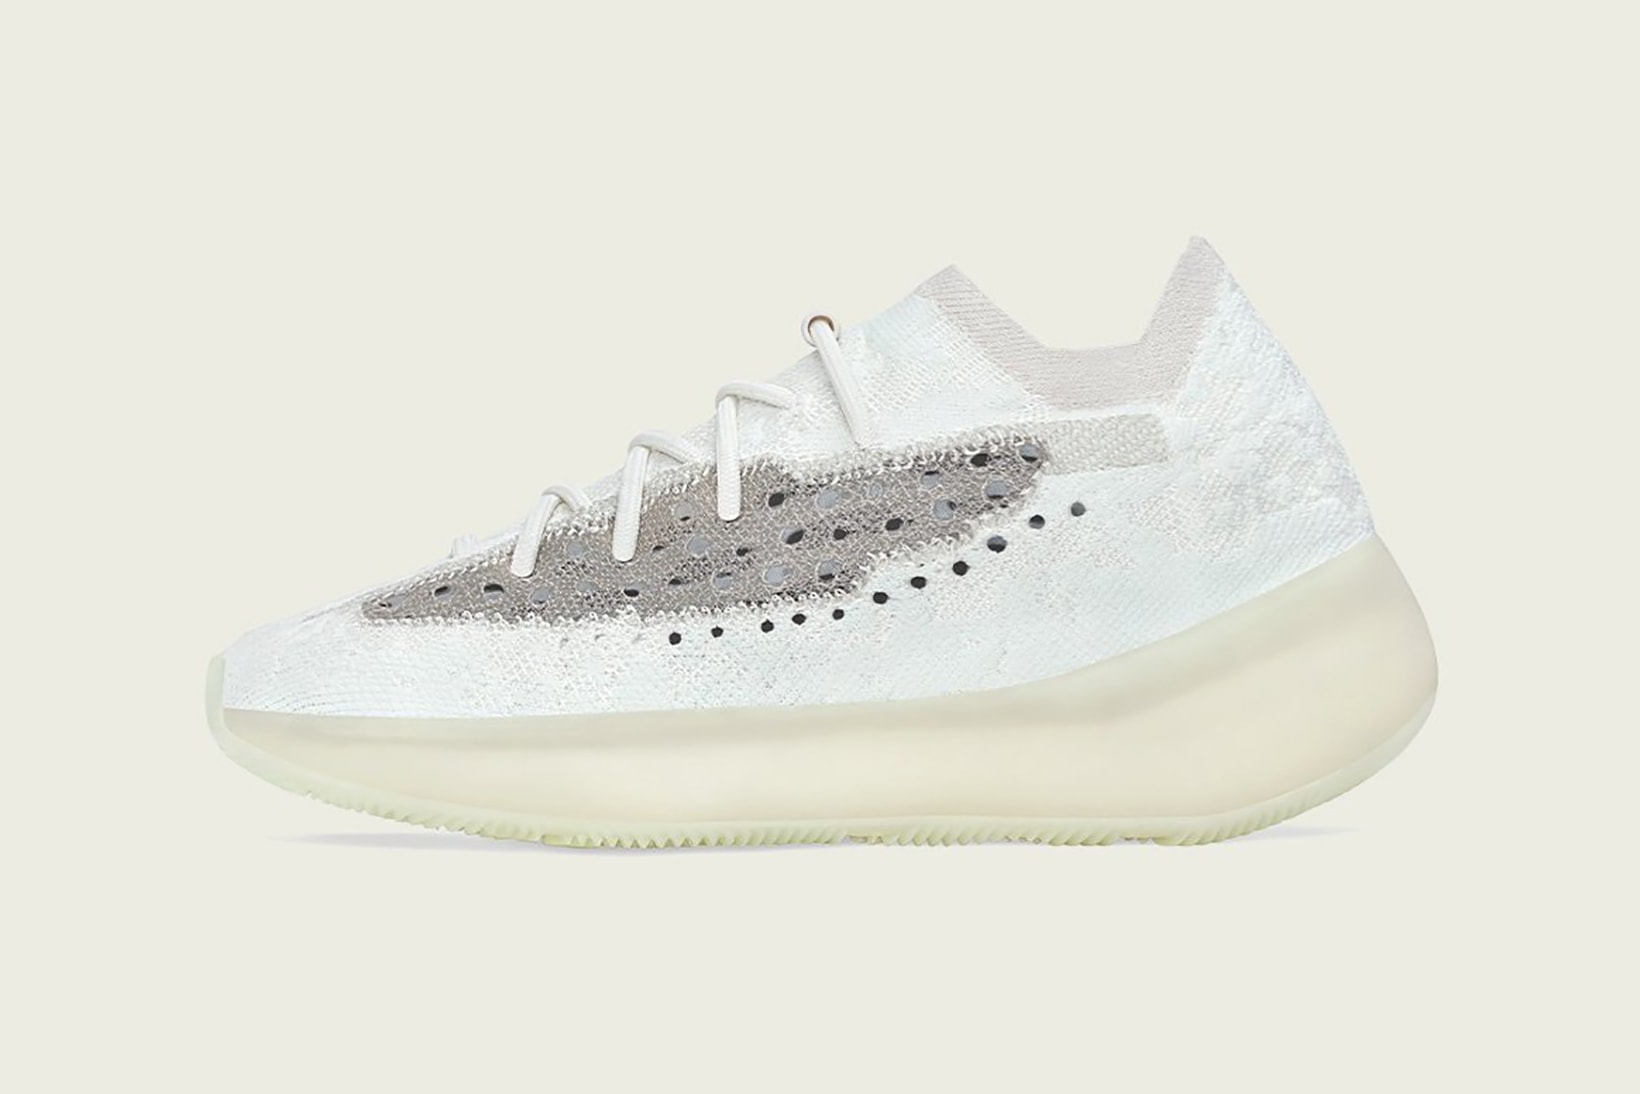 adidas kanye west yeezy boost 380 sneakers calcite glow cream white gray colorway shoes footwear sneakerhead